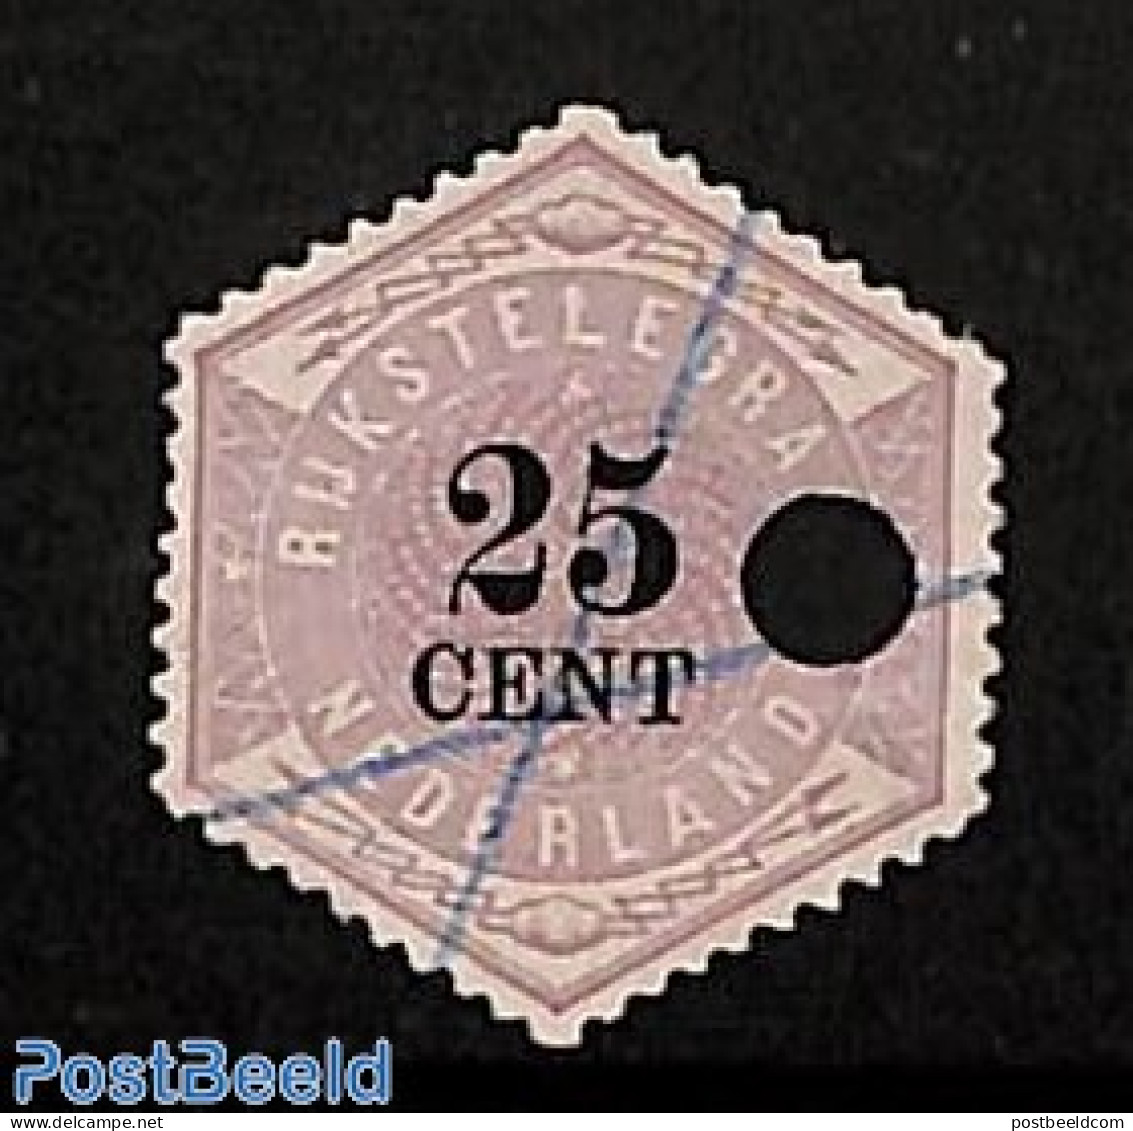 Netherlands 1877 Telegraph Stamp 25c Used 1v, Used Or CTO - Telegraphenmarken